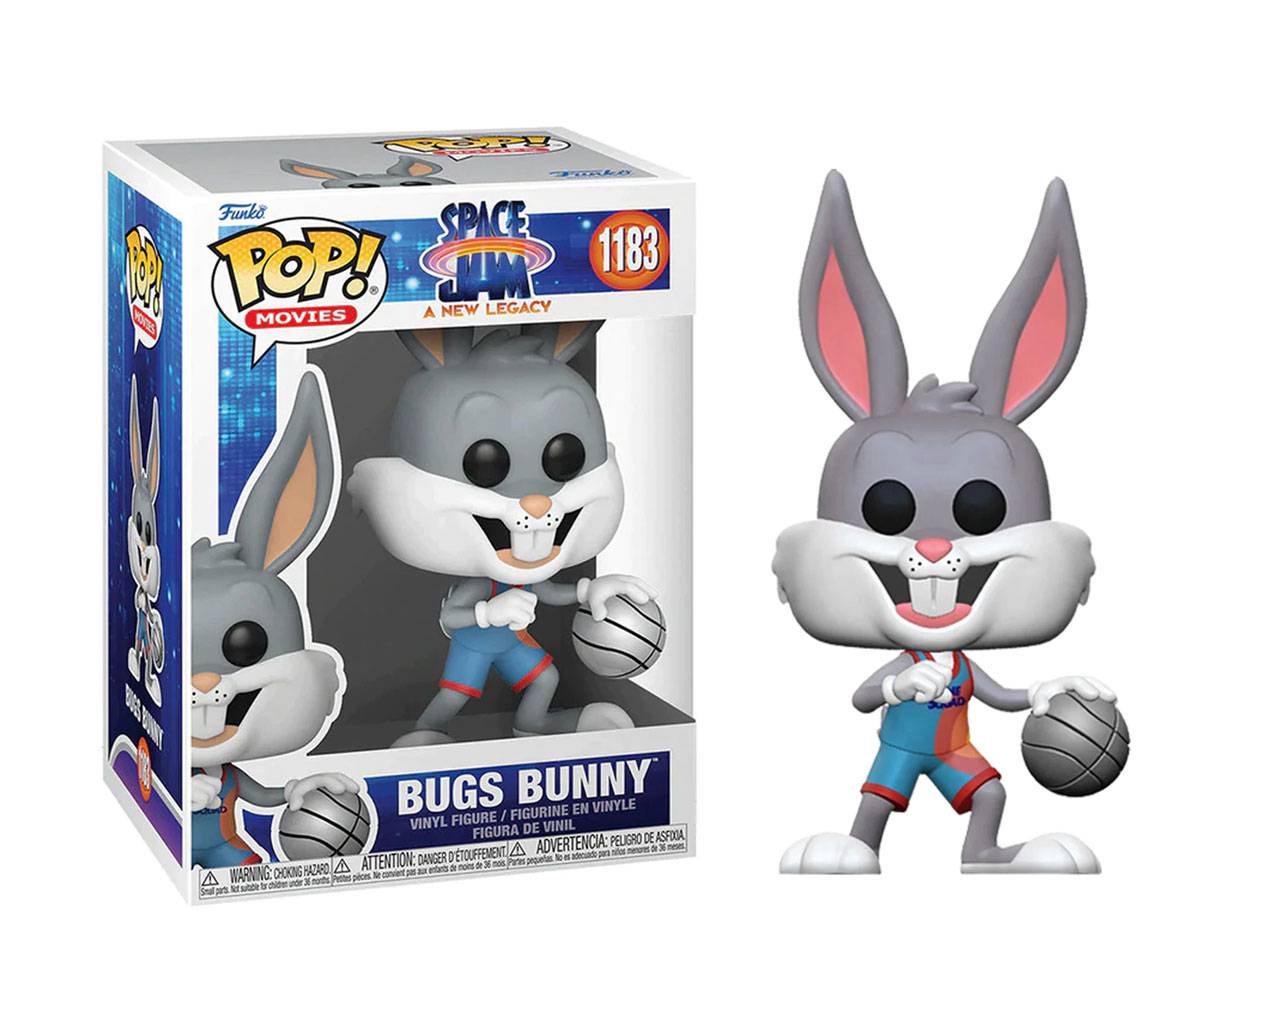 Bugs Bunny (Space Jam 2) Pop! Vinyl